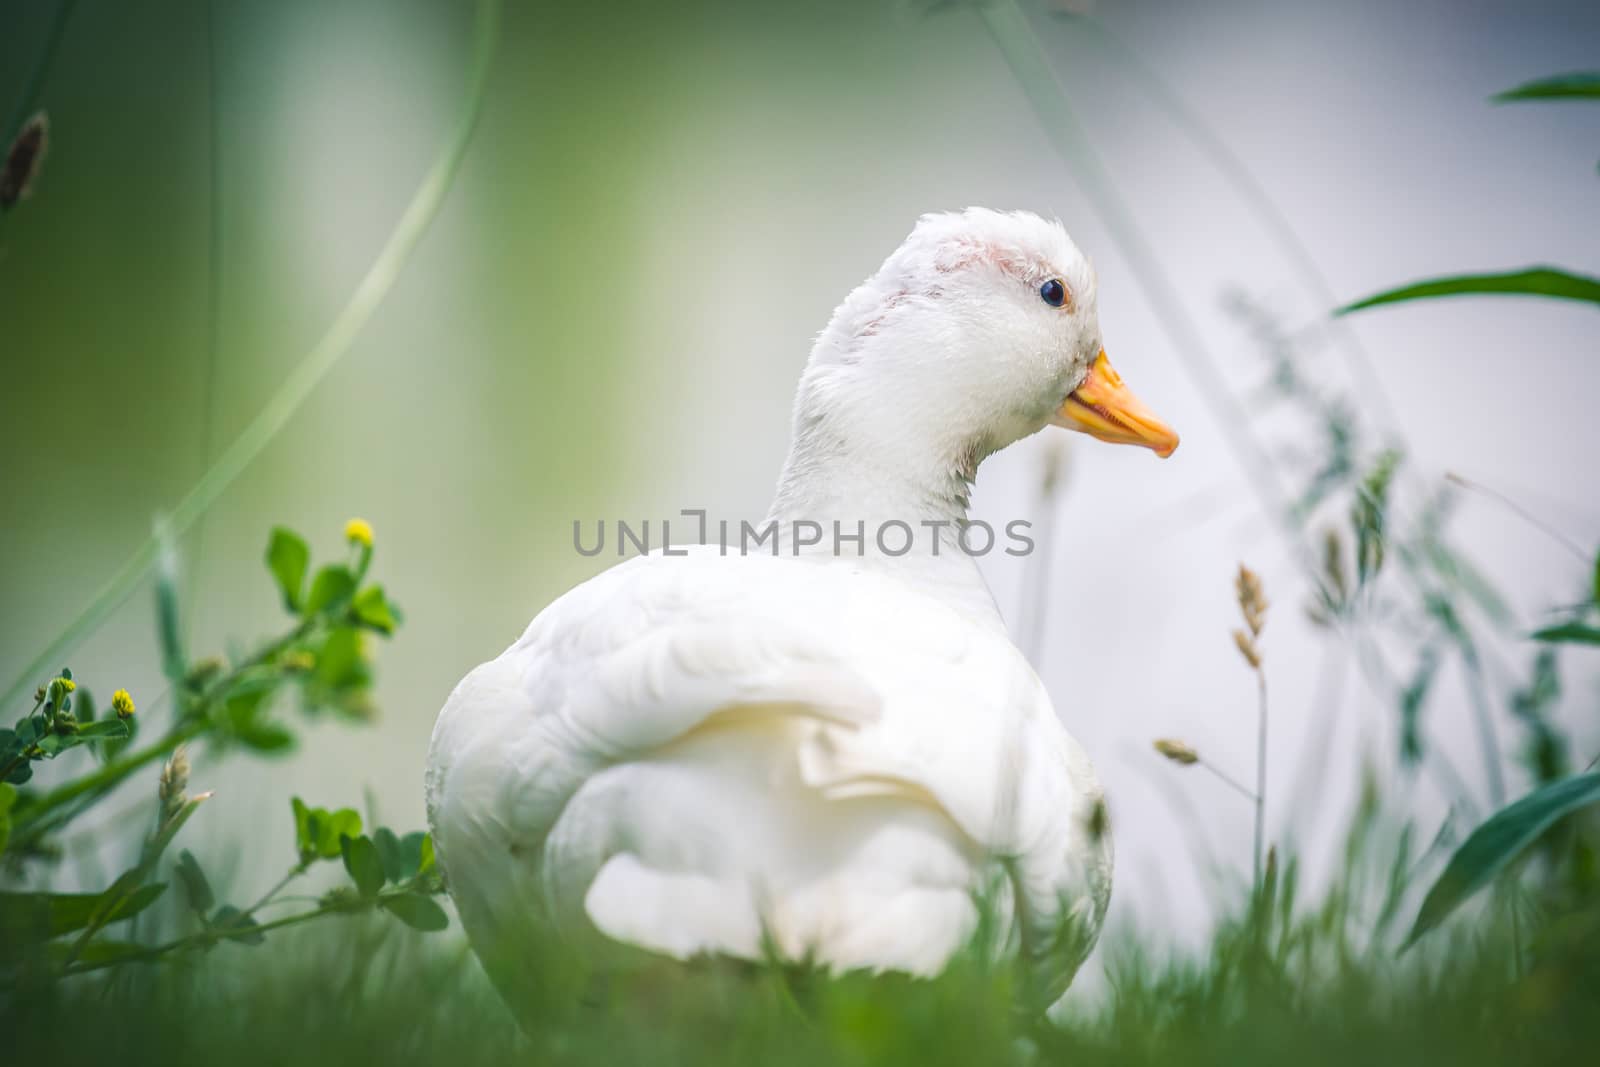 domestic goose resting on fresh grass